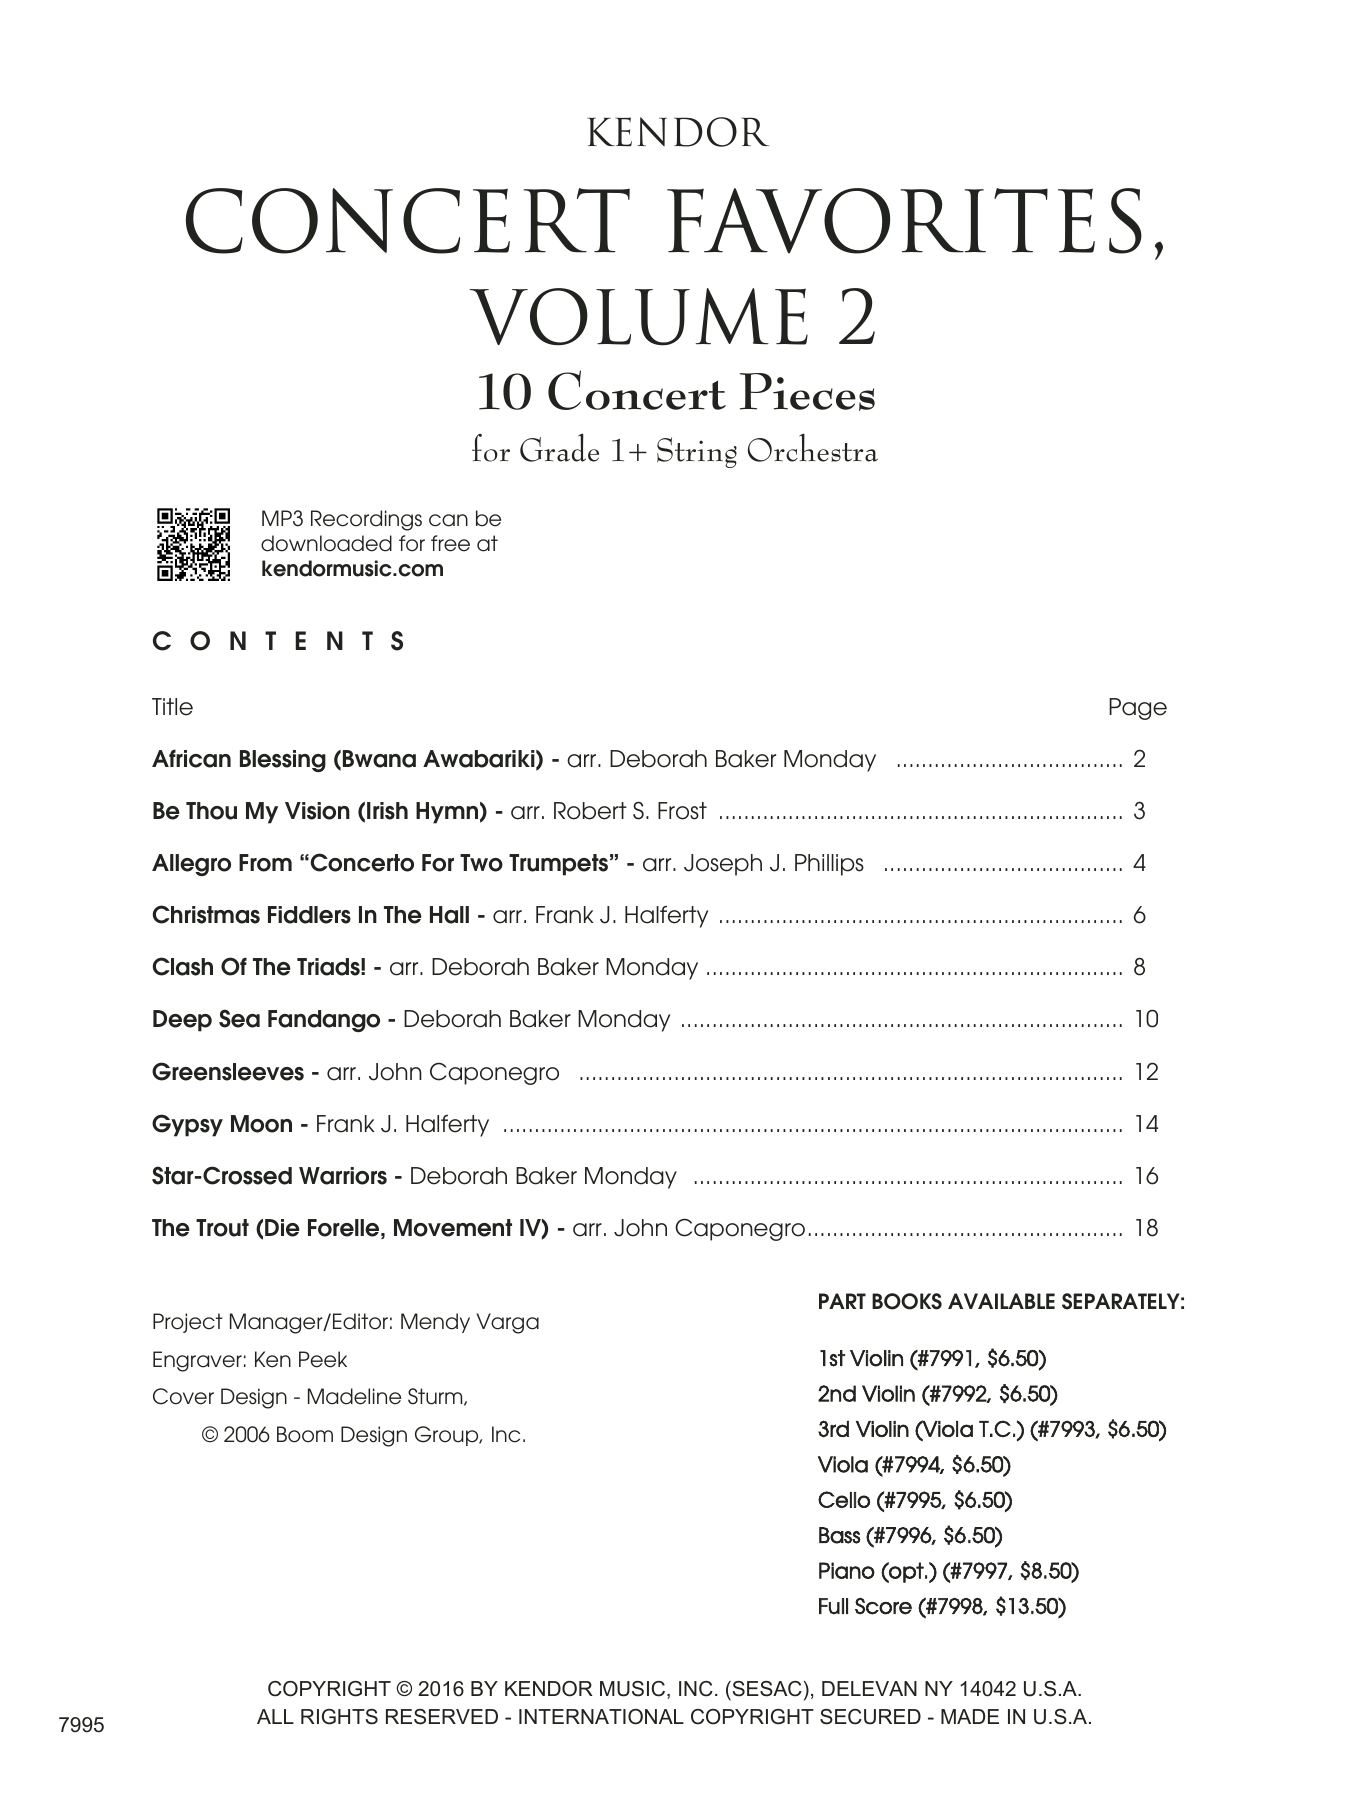 Download Various Kendor Concert Favorites, Volume 2 - Ce Sheet Music